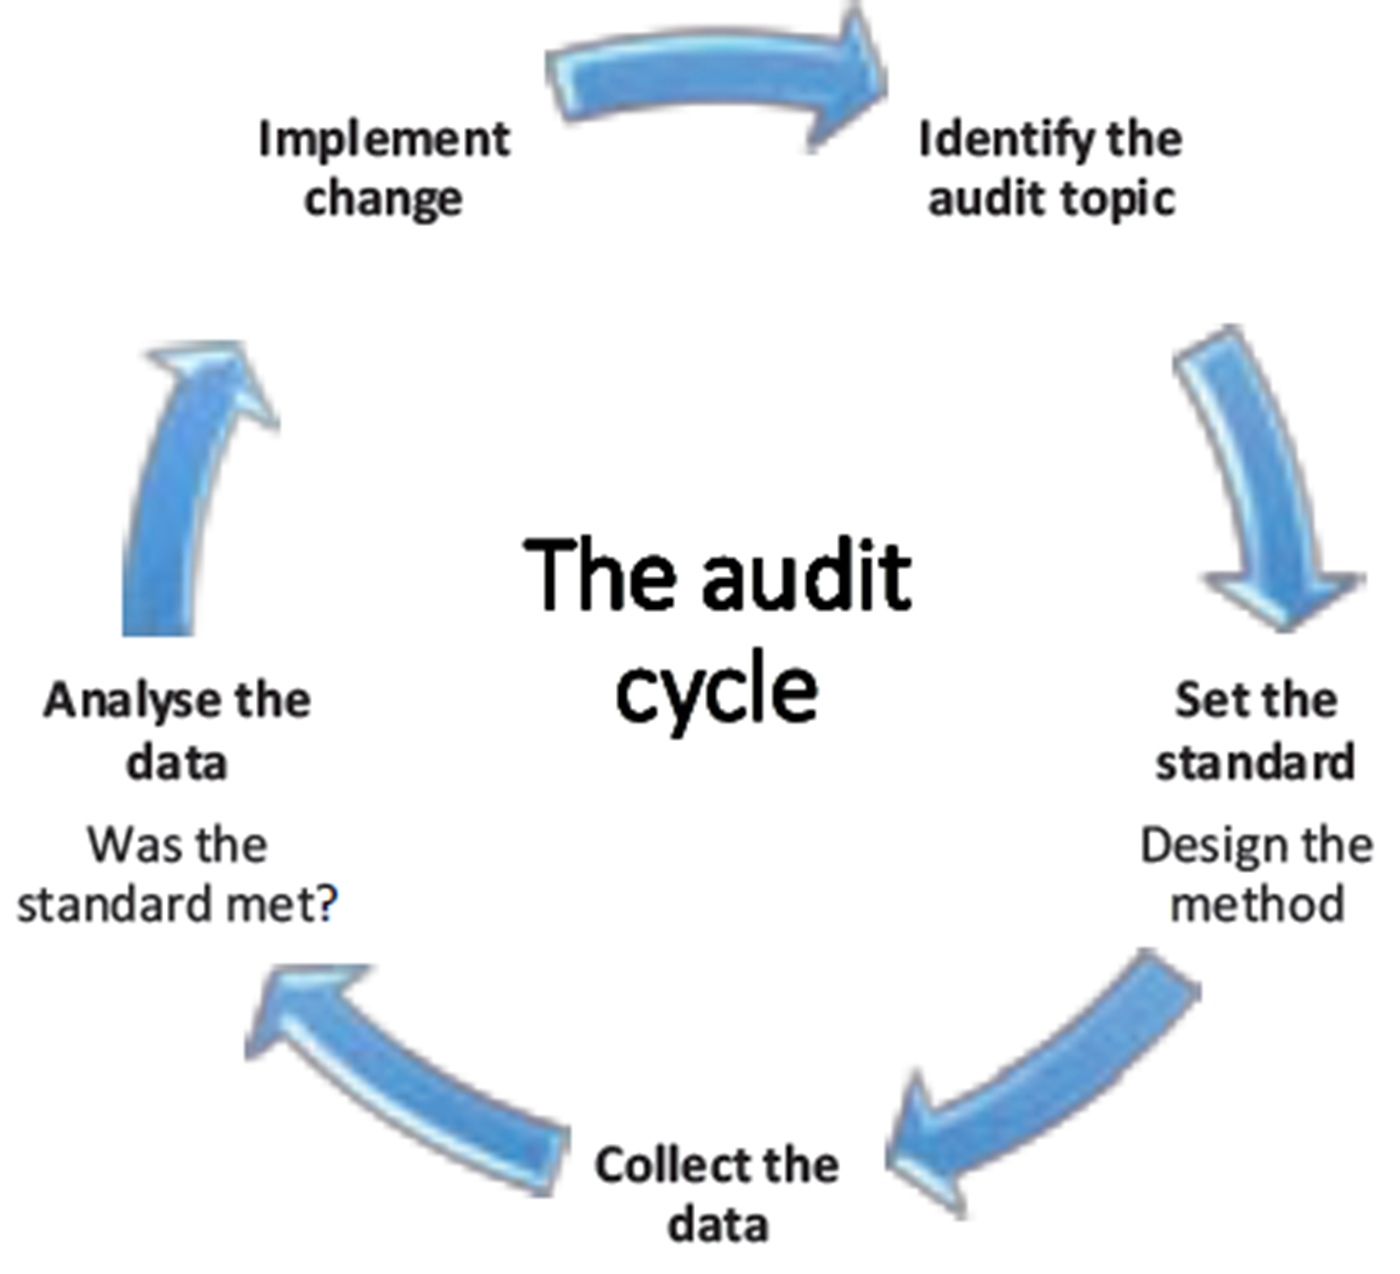 /COO/media/Media/Images/SPOKE/Audit-cycle-jpg.PNG